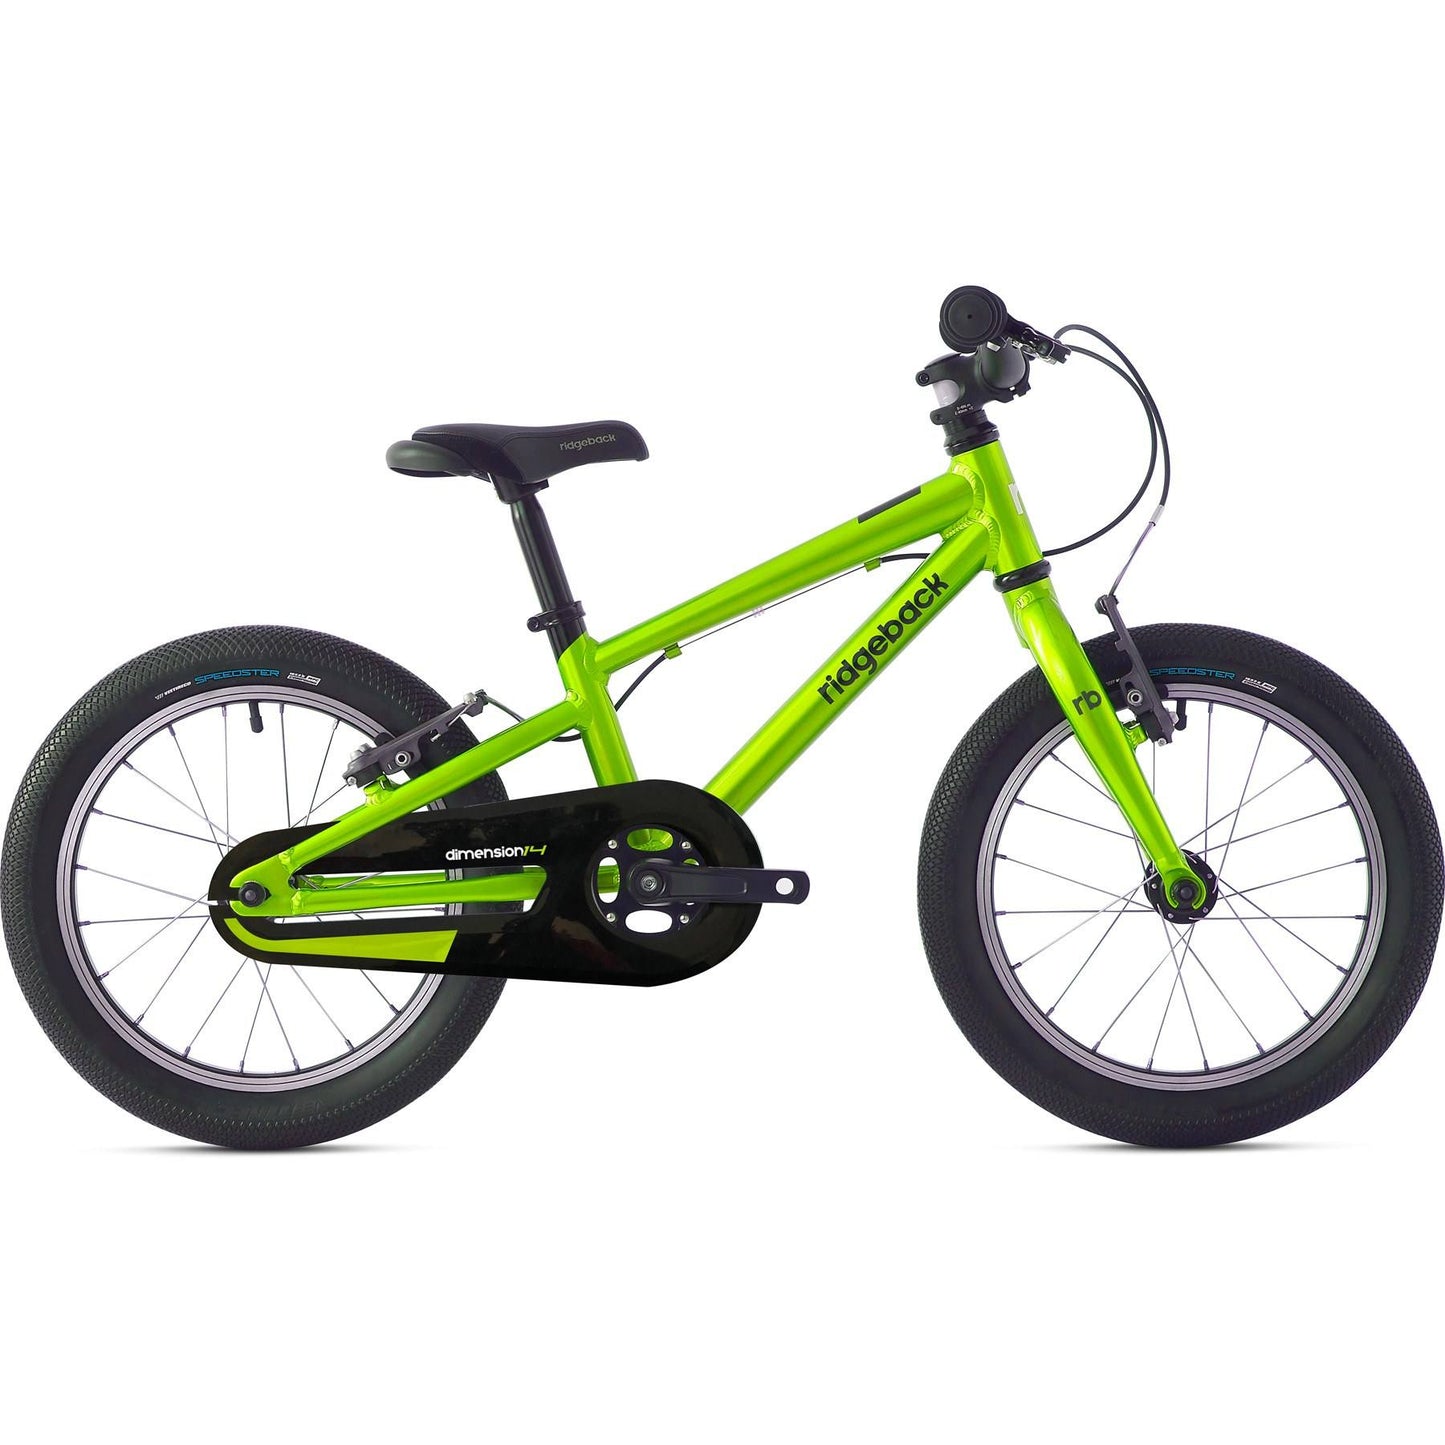 Ridgeback Dimension 14 2020 Kid's Bike - Lime